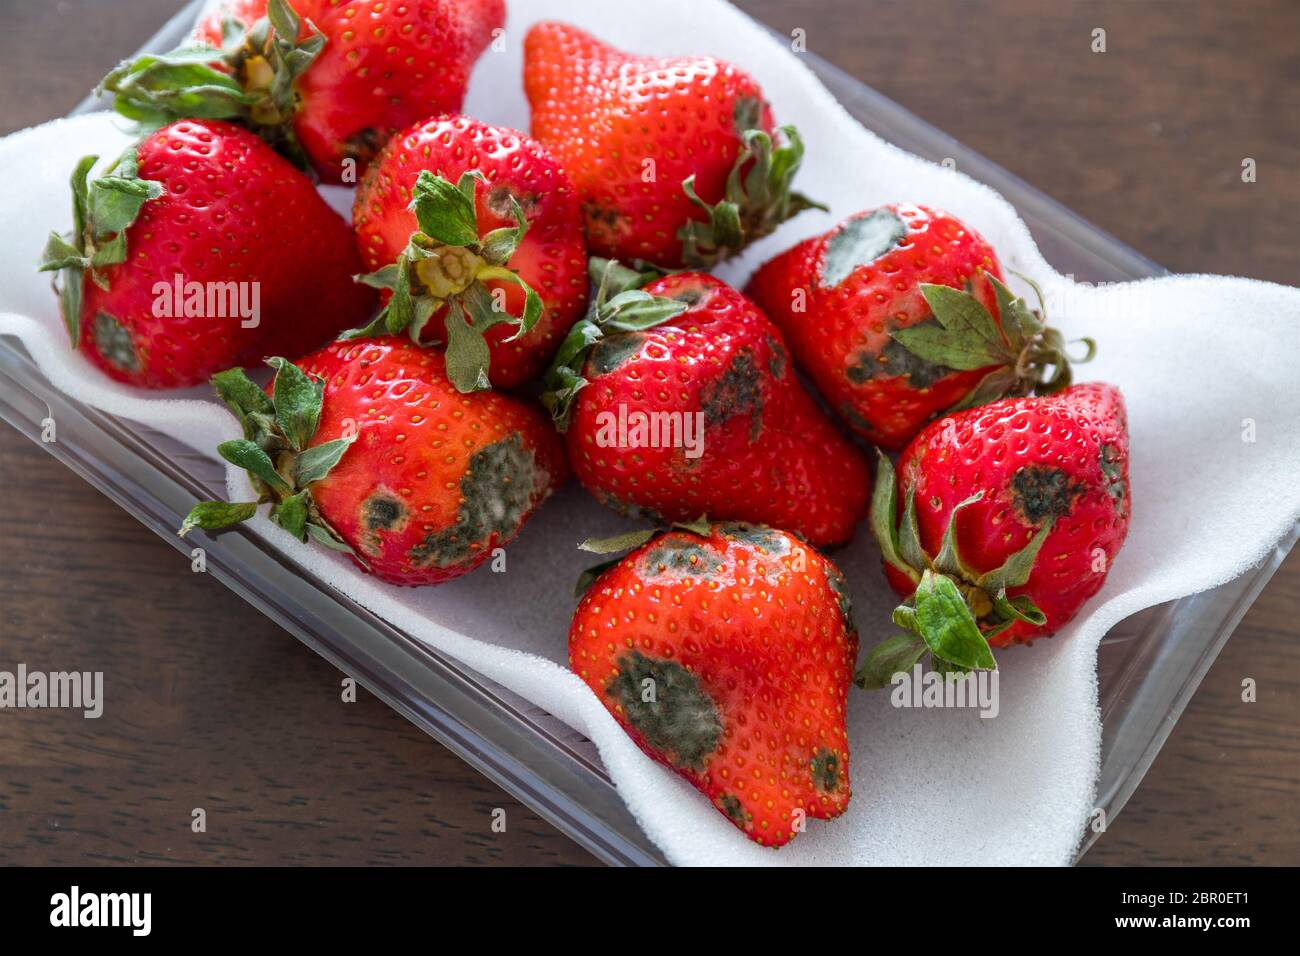 Mold on strawberries Stock Photo